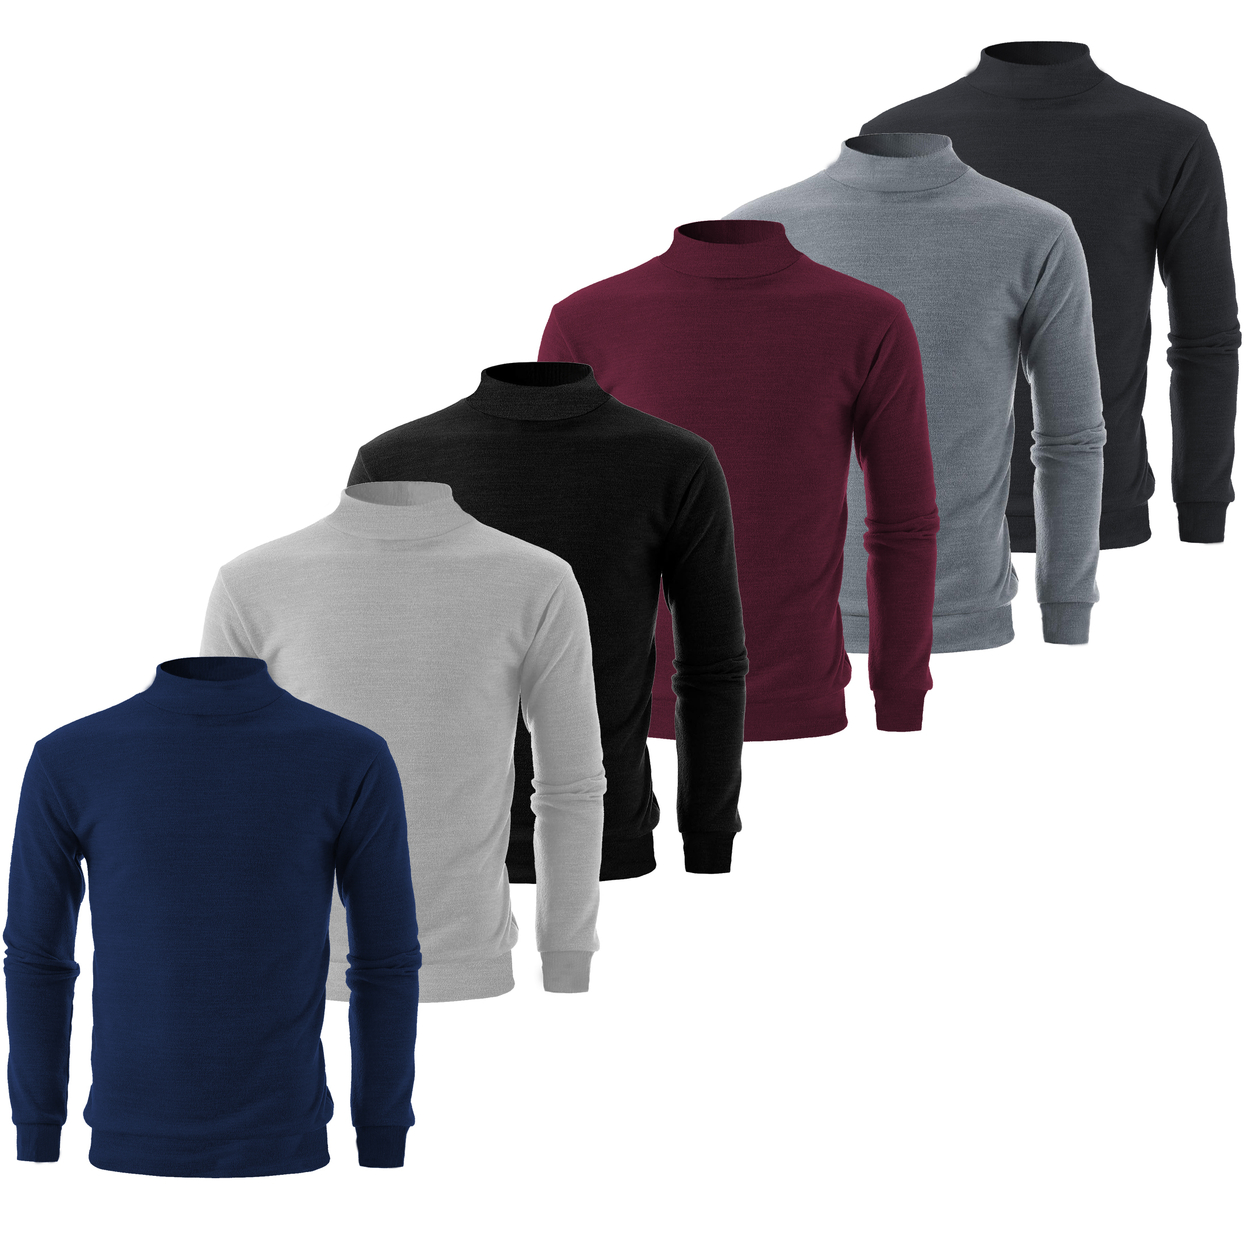 Men's Winter Warm Cozy Knit Slim-Fit Mock Neck Sweater - Navy, X-large